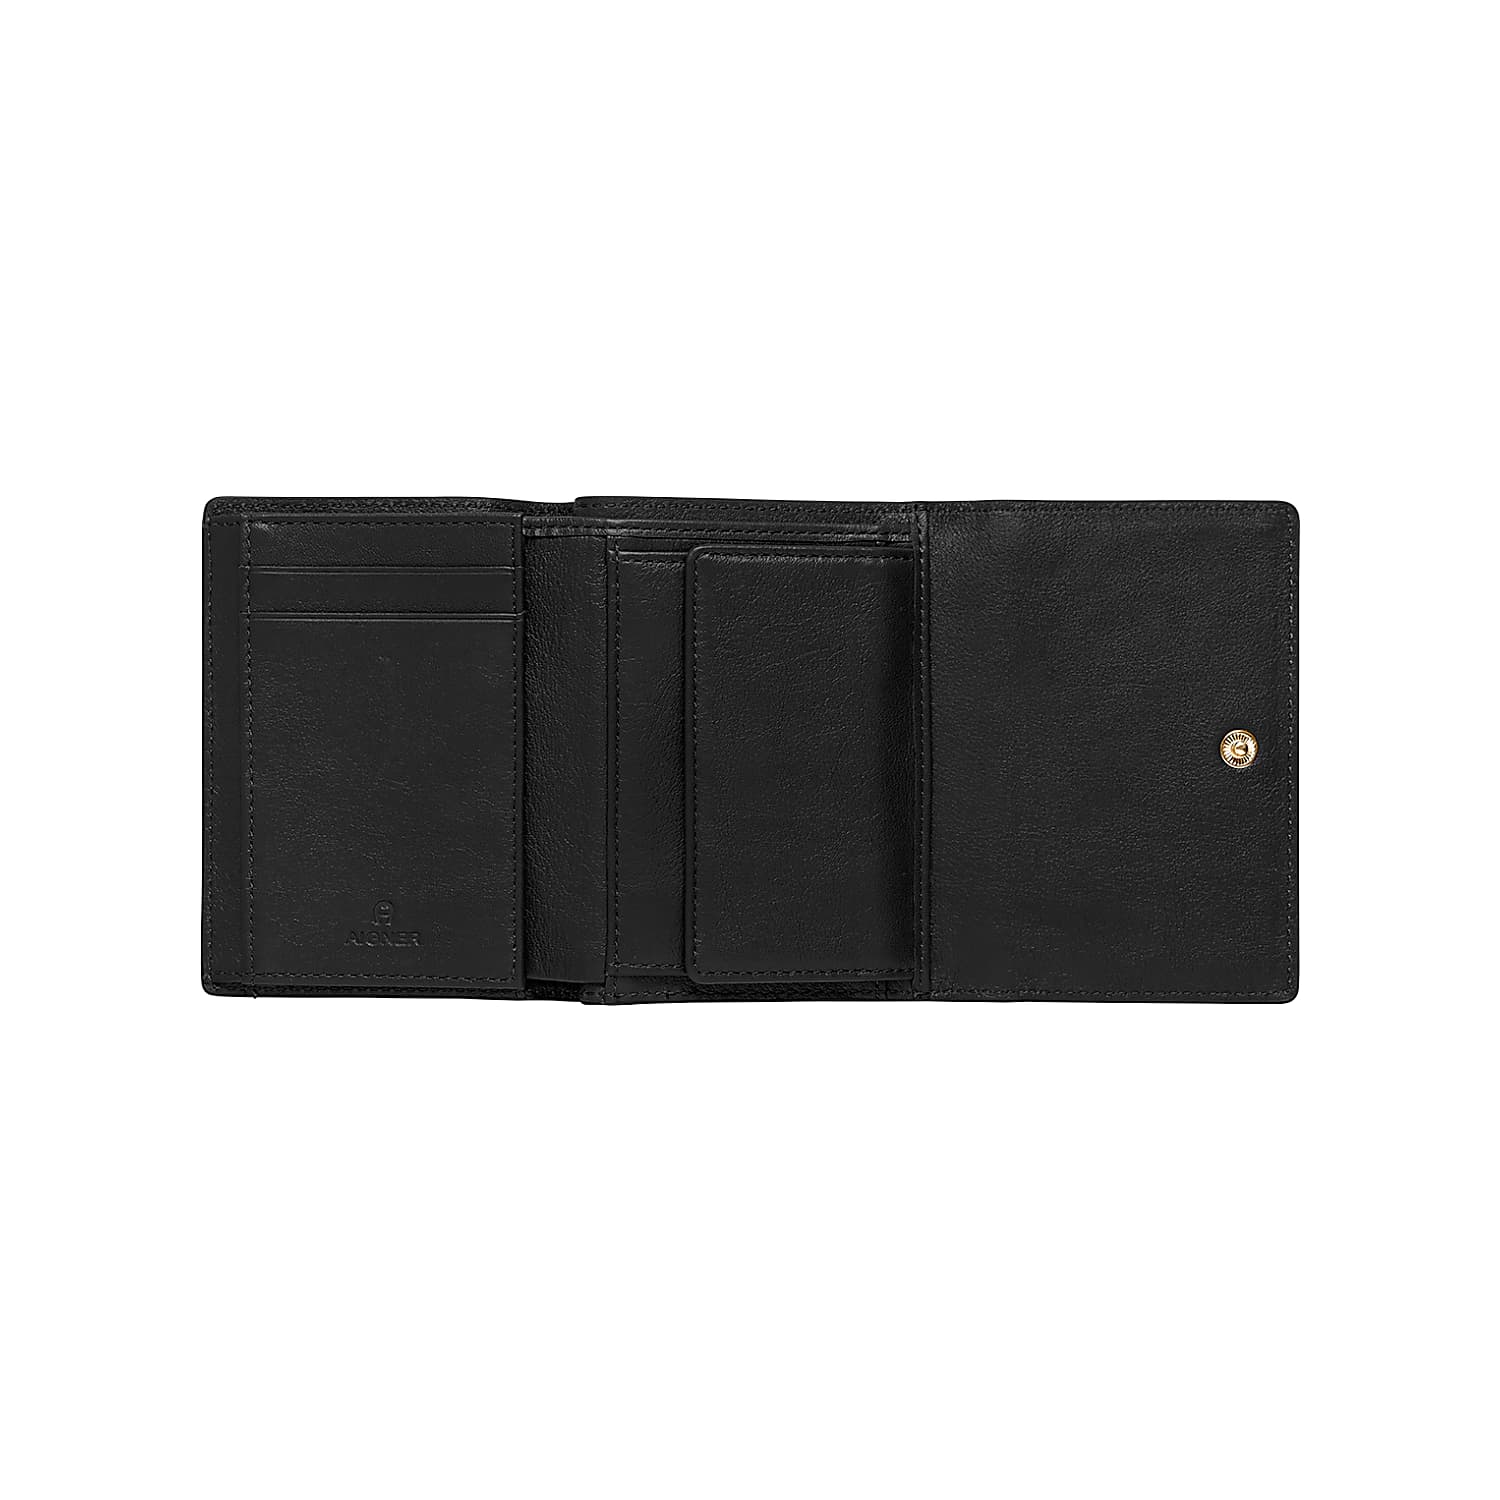 Giulietta combination wallet